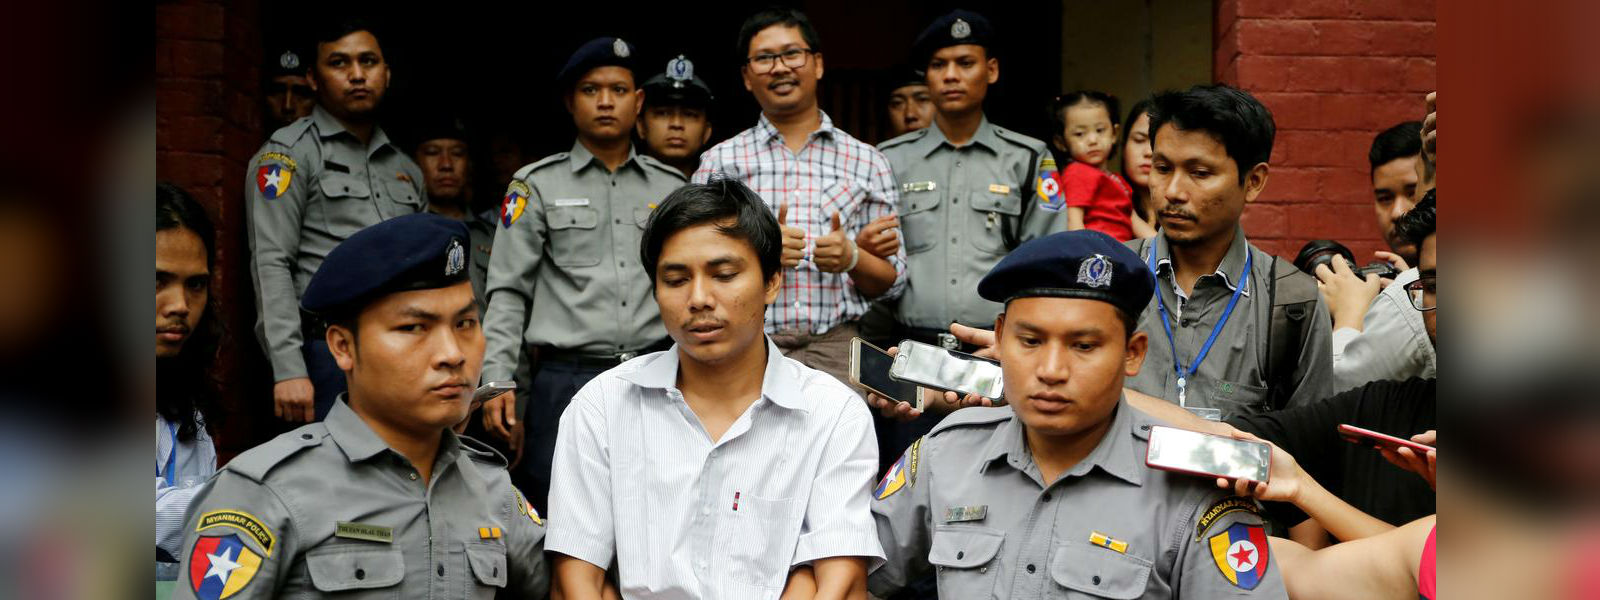 Reuters journalists in Myanmar appeal